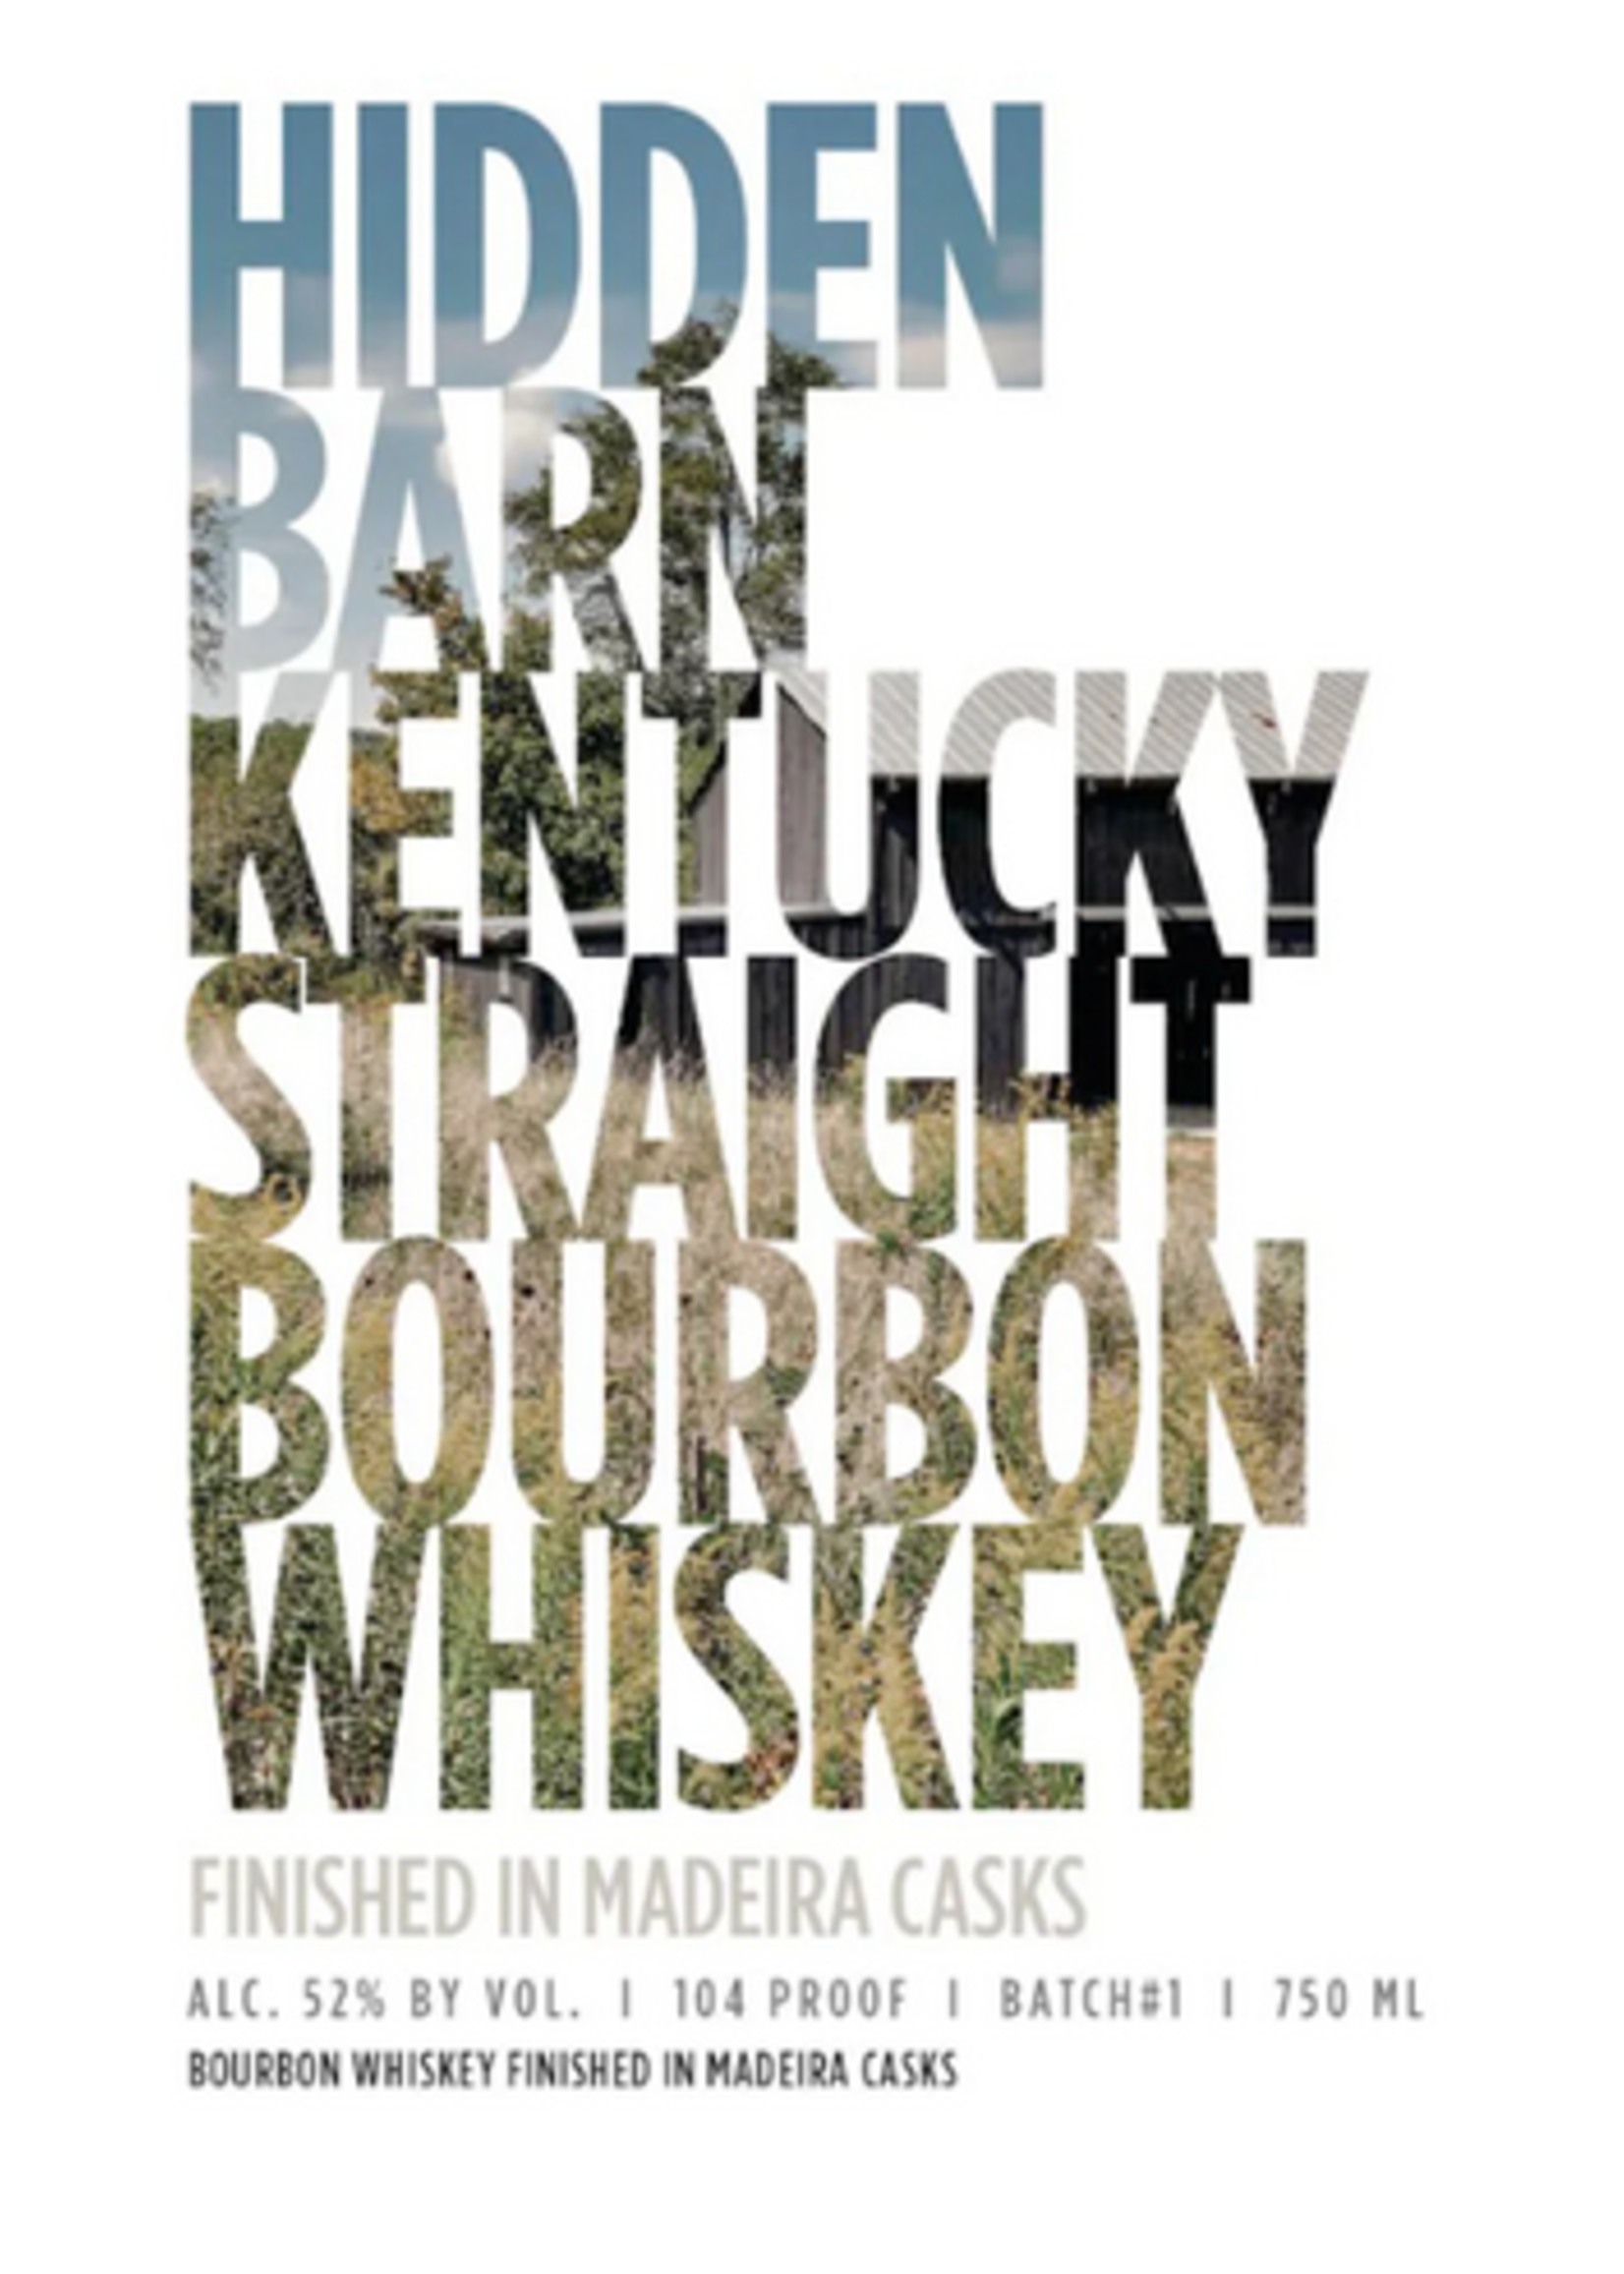 Whiskey - Neeley Family Distillerey - Hidden Barn Kentucky Straight Bourbonm MADEIRA CASK